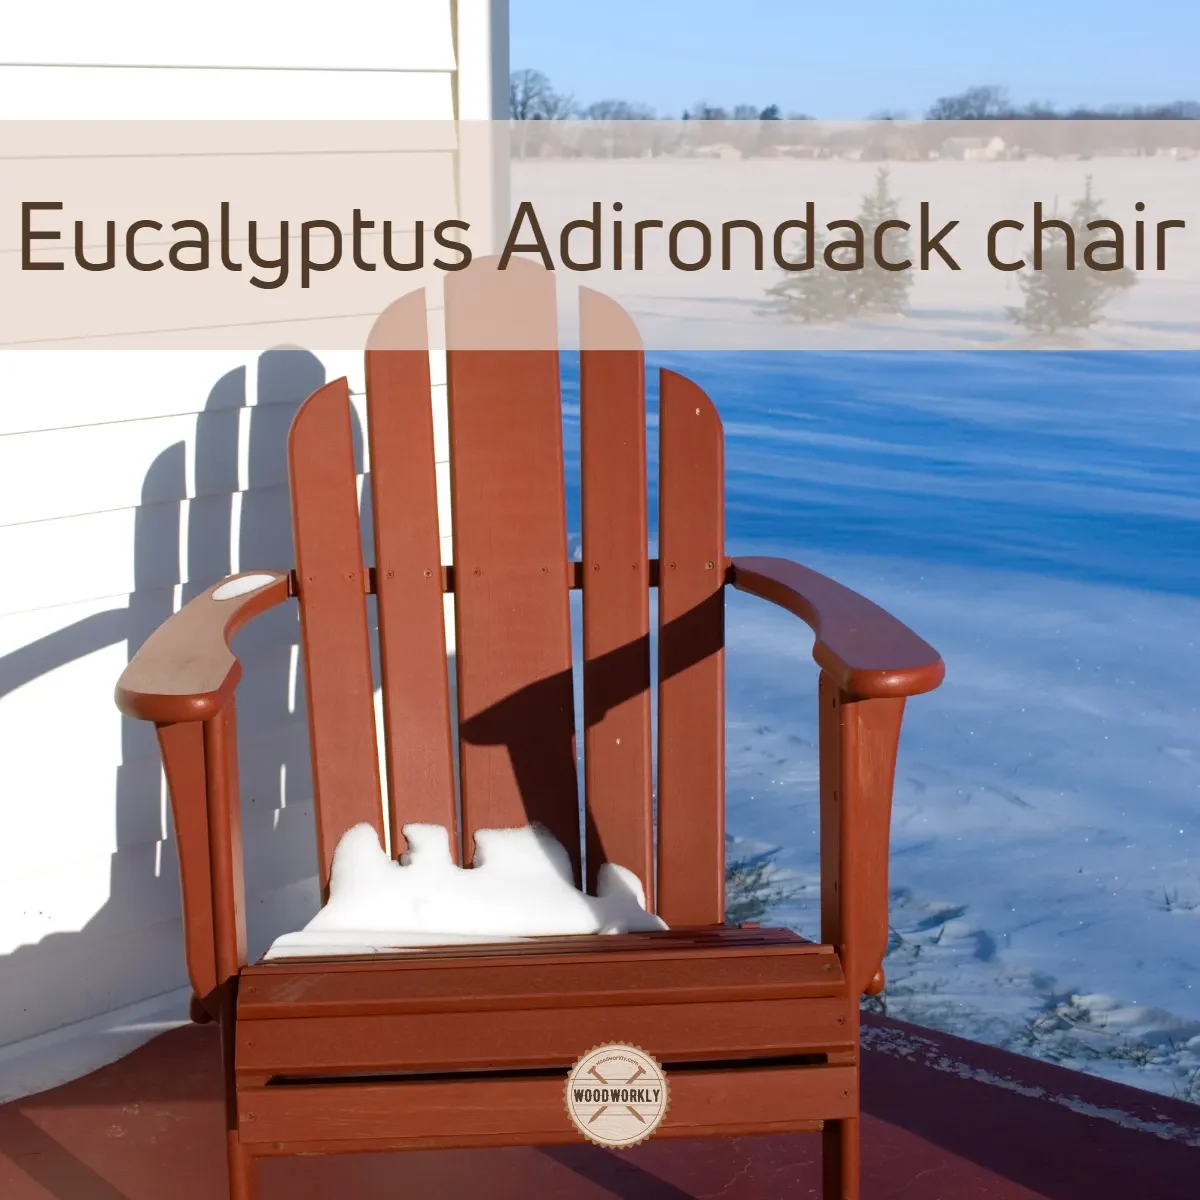 Eucalyptus Adirondack chair